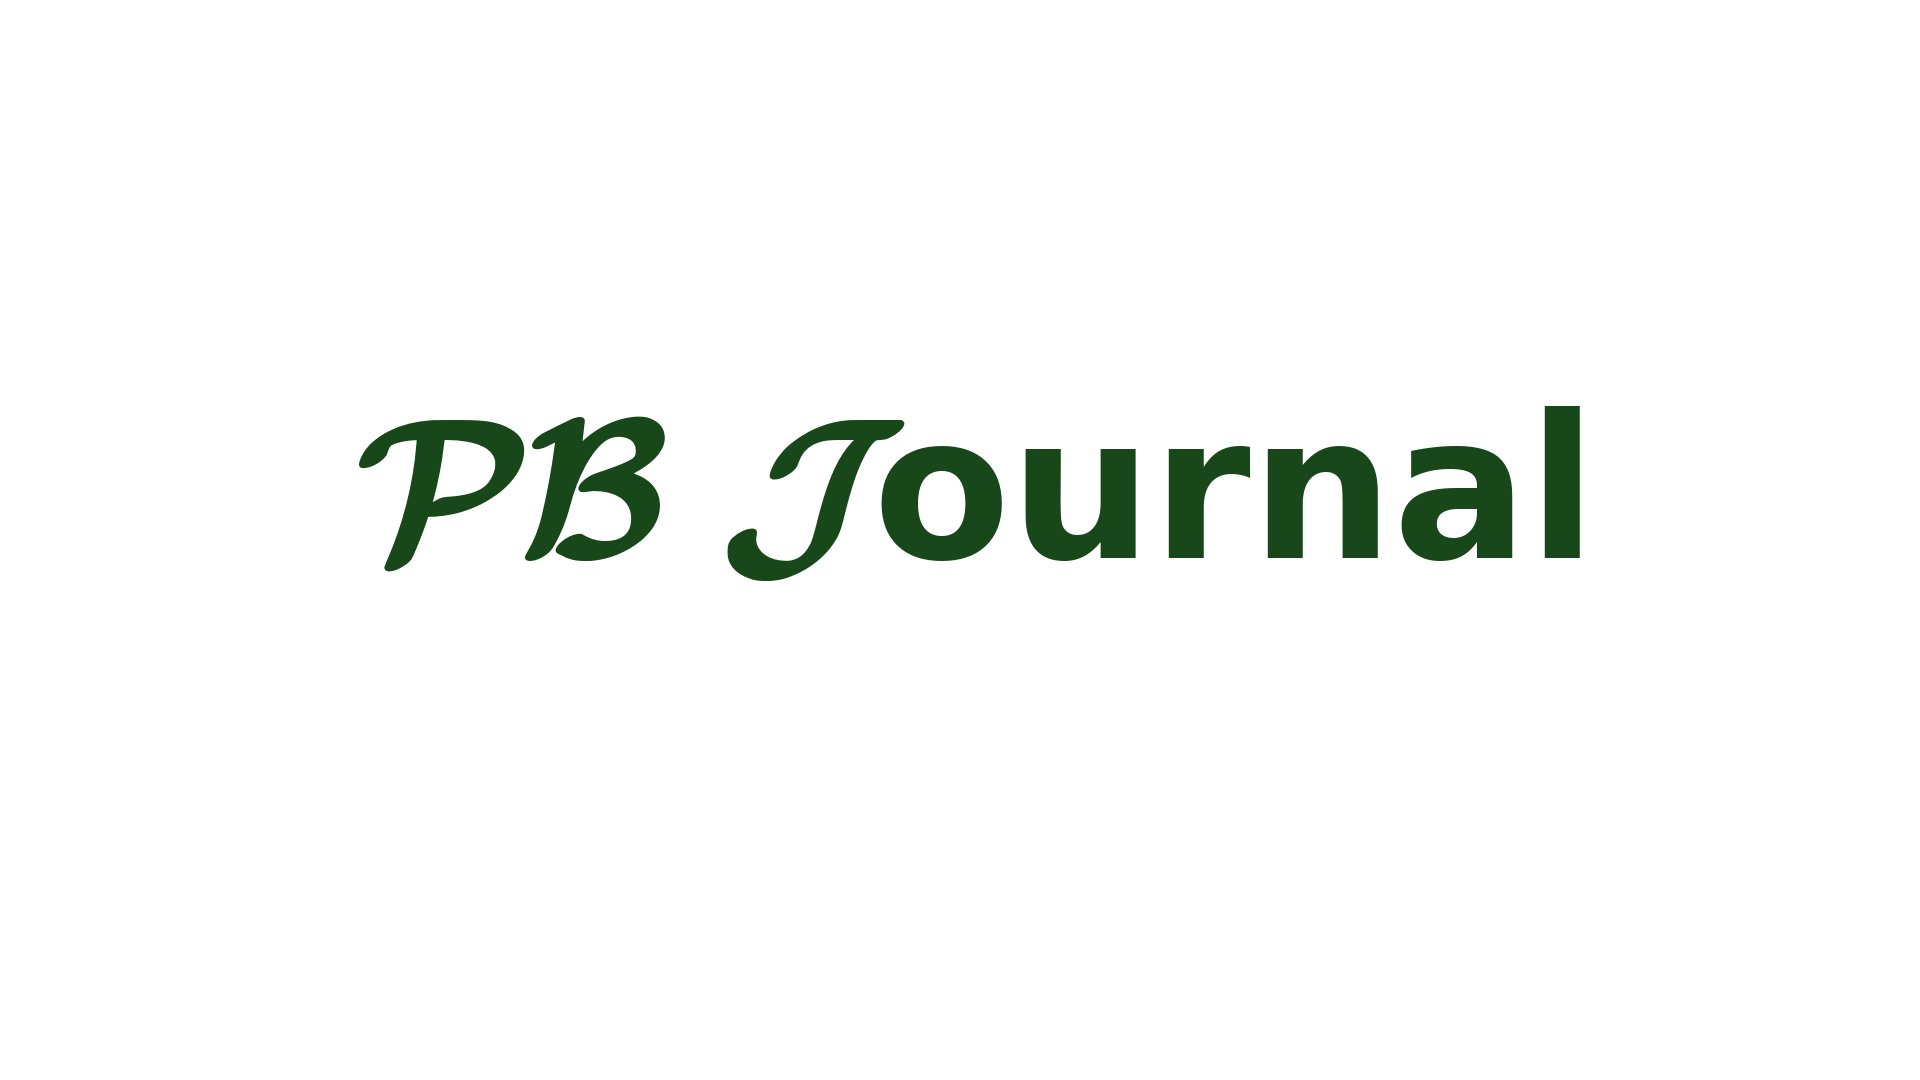 PB Journal thumbnail